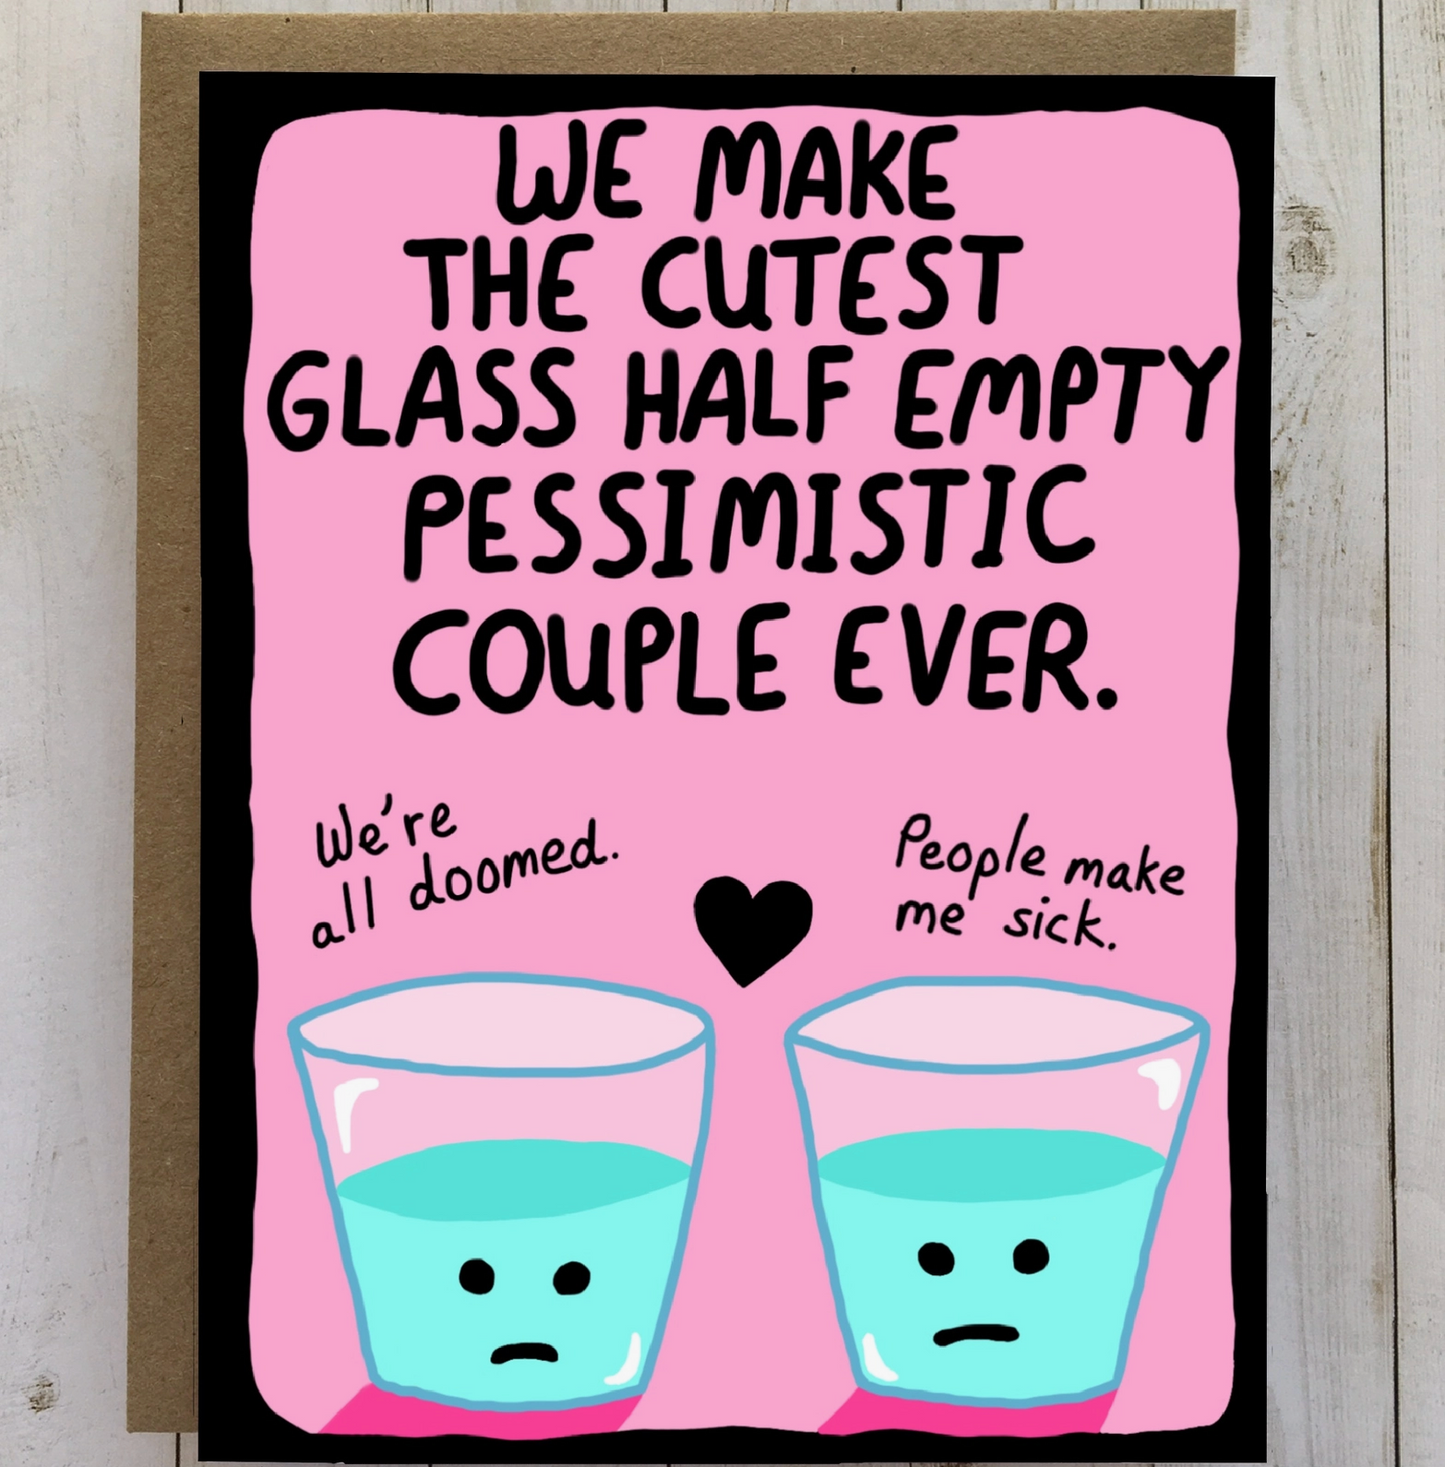 Glass Half Empty Pessimistic Couple Card